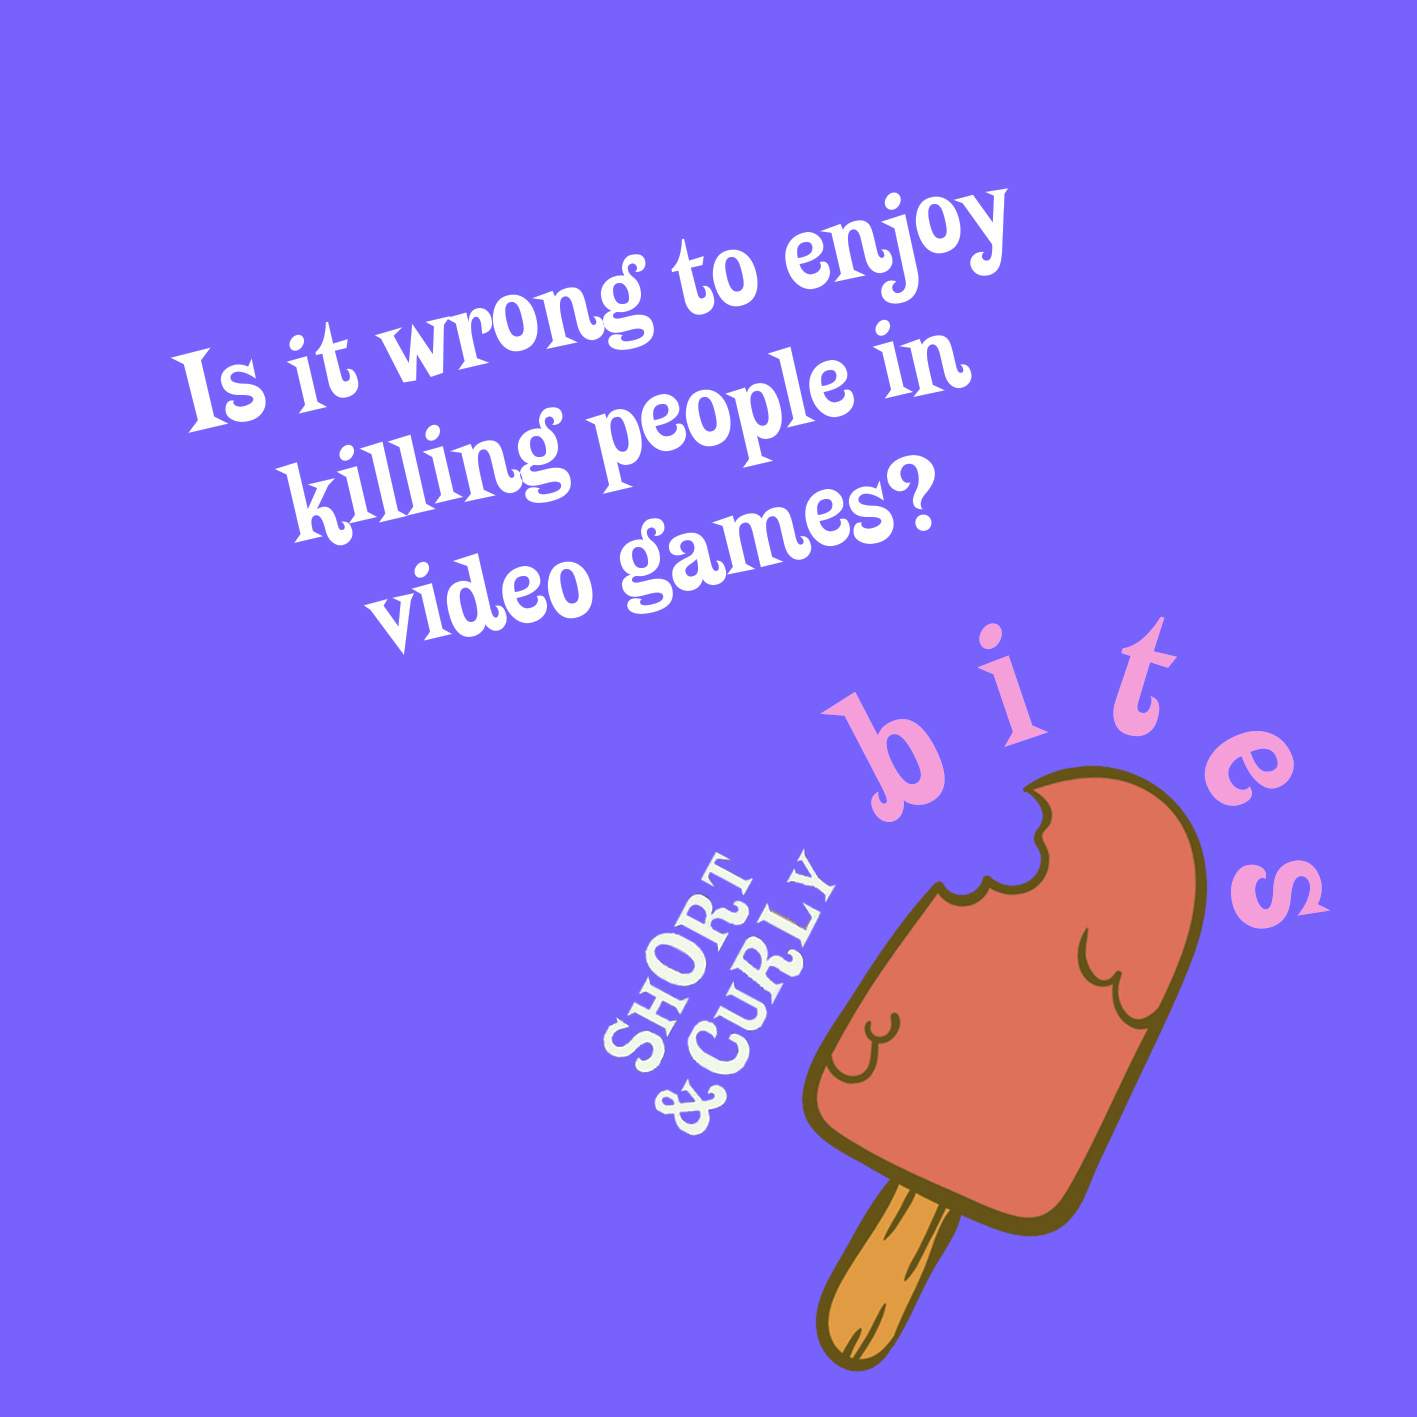 BITE — Killing in computer games